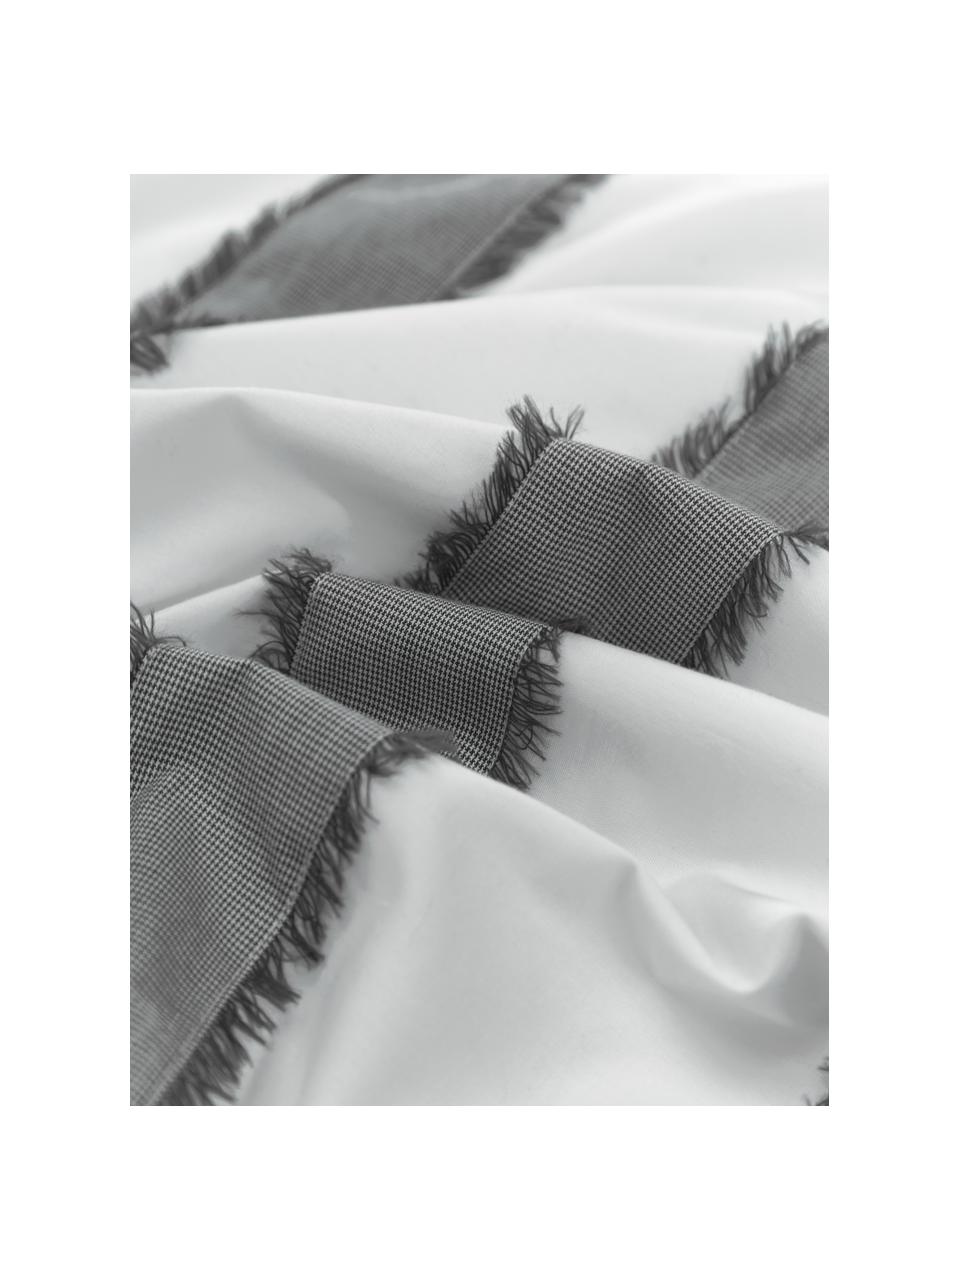 Baumwollperkal-Bettwäsche Raja in Grau/Weiß mit Fransen, Webart: Perkal Fadendichte 205 TC, Weiß, Grau, 200 x 200 cm + 2 Kissen 80 x 80 cm